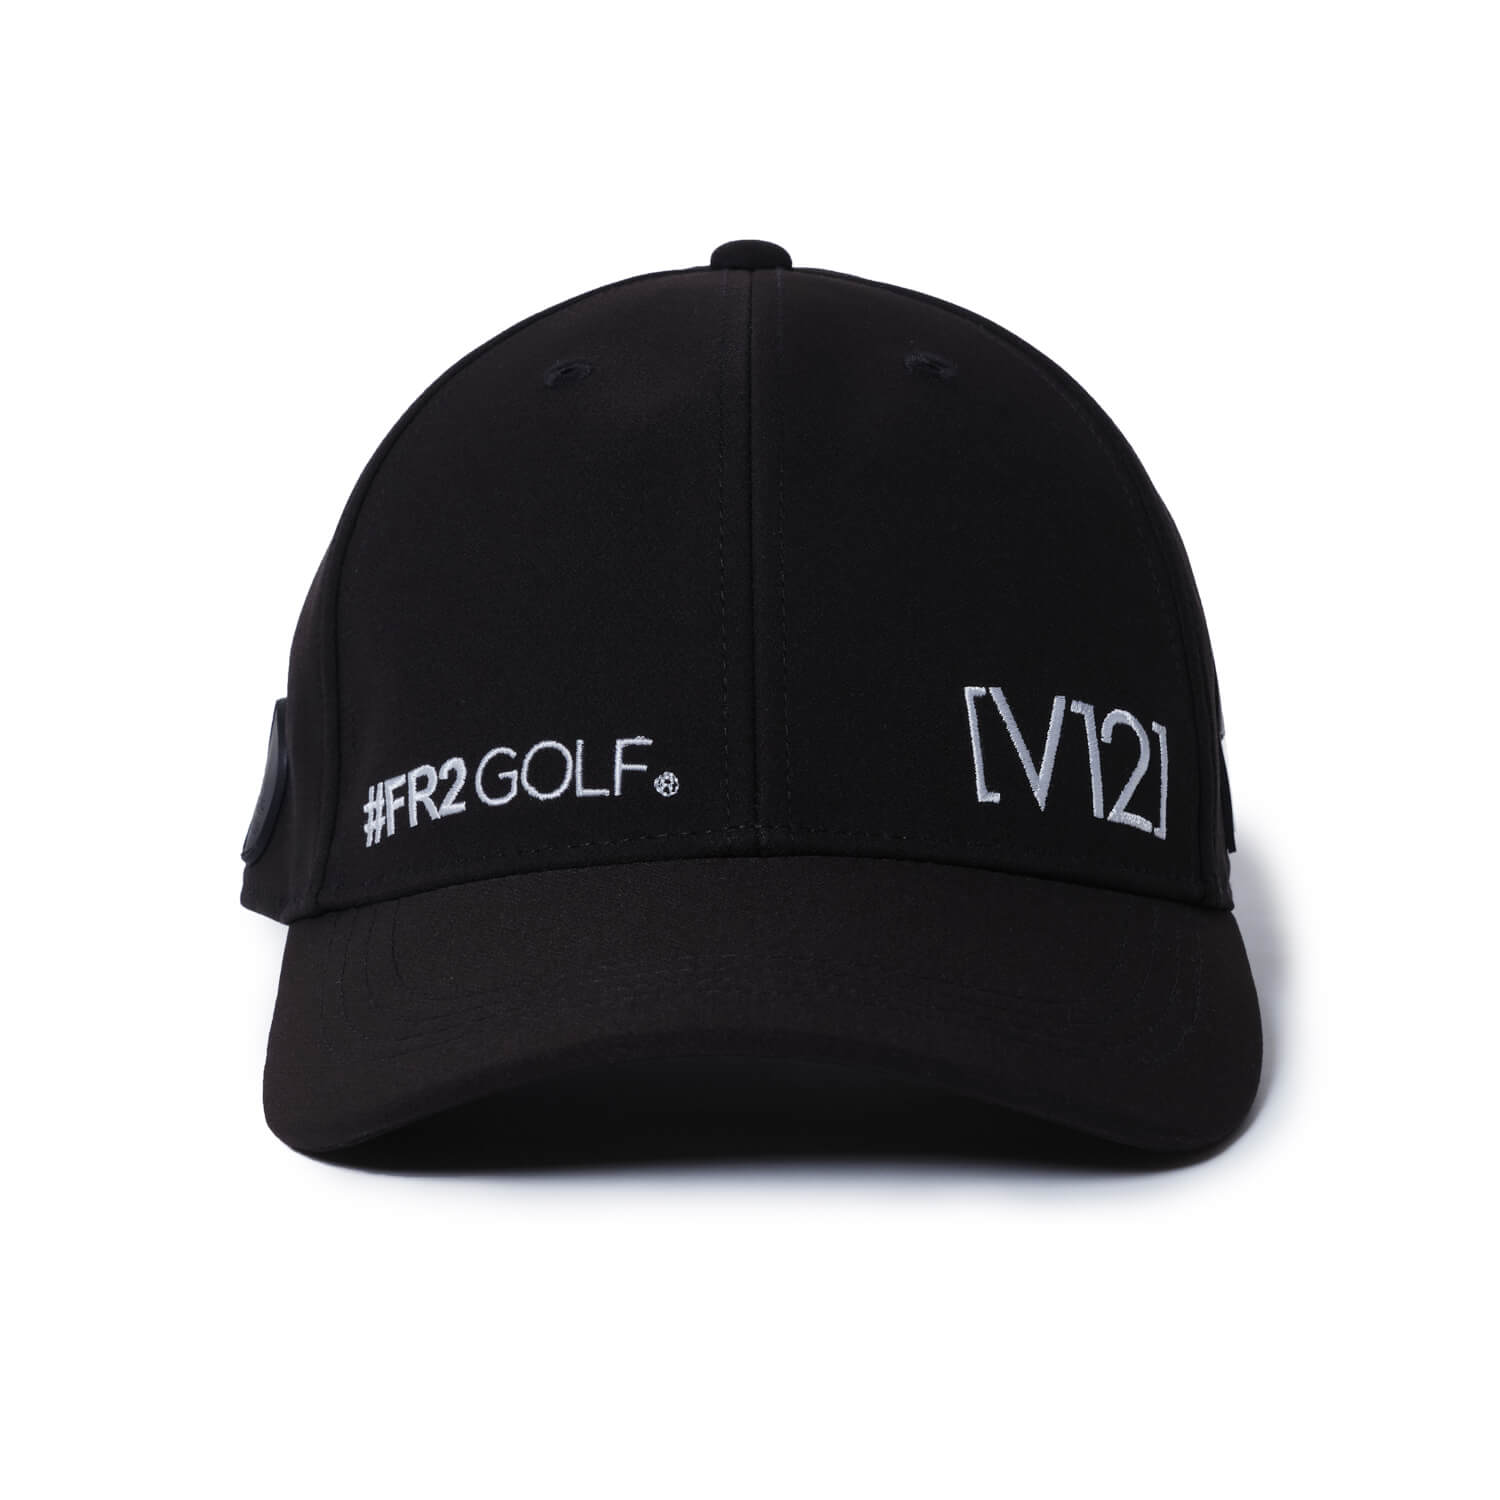 V12] ゴルフ キャップ FR2 CAP | 【公式通販】